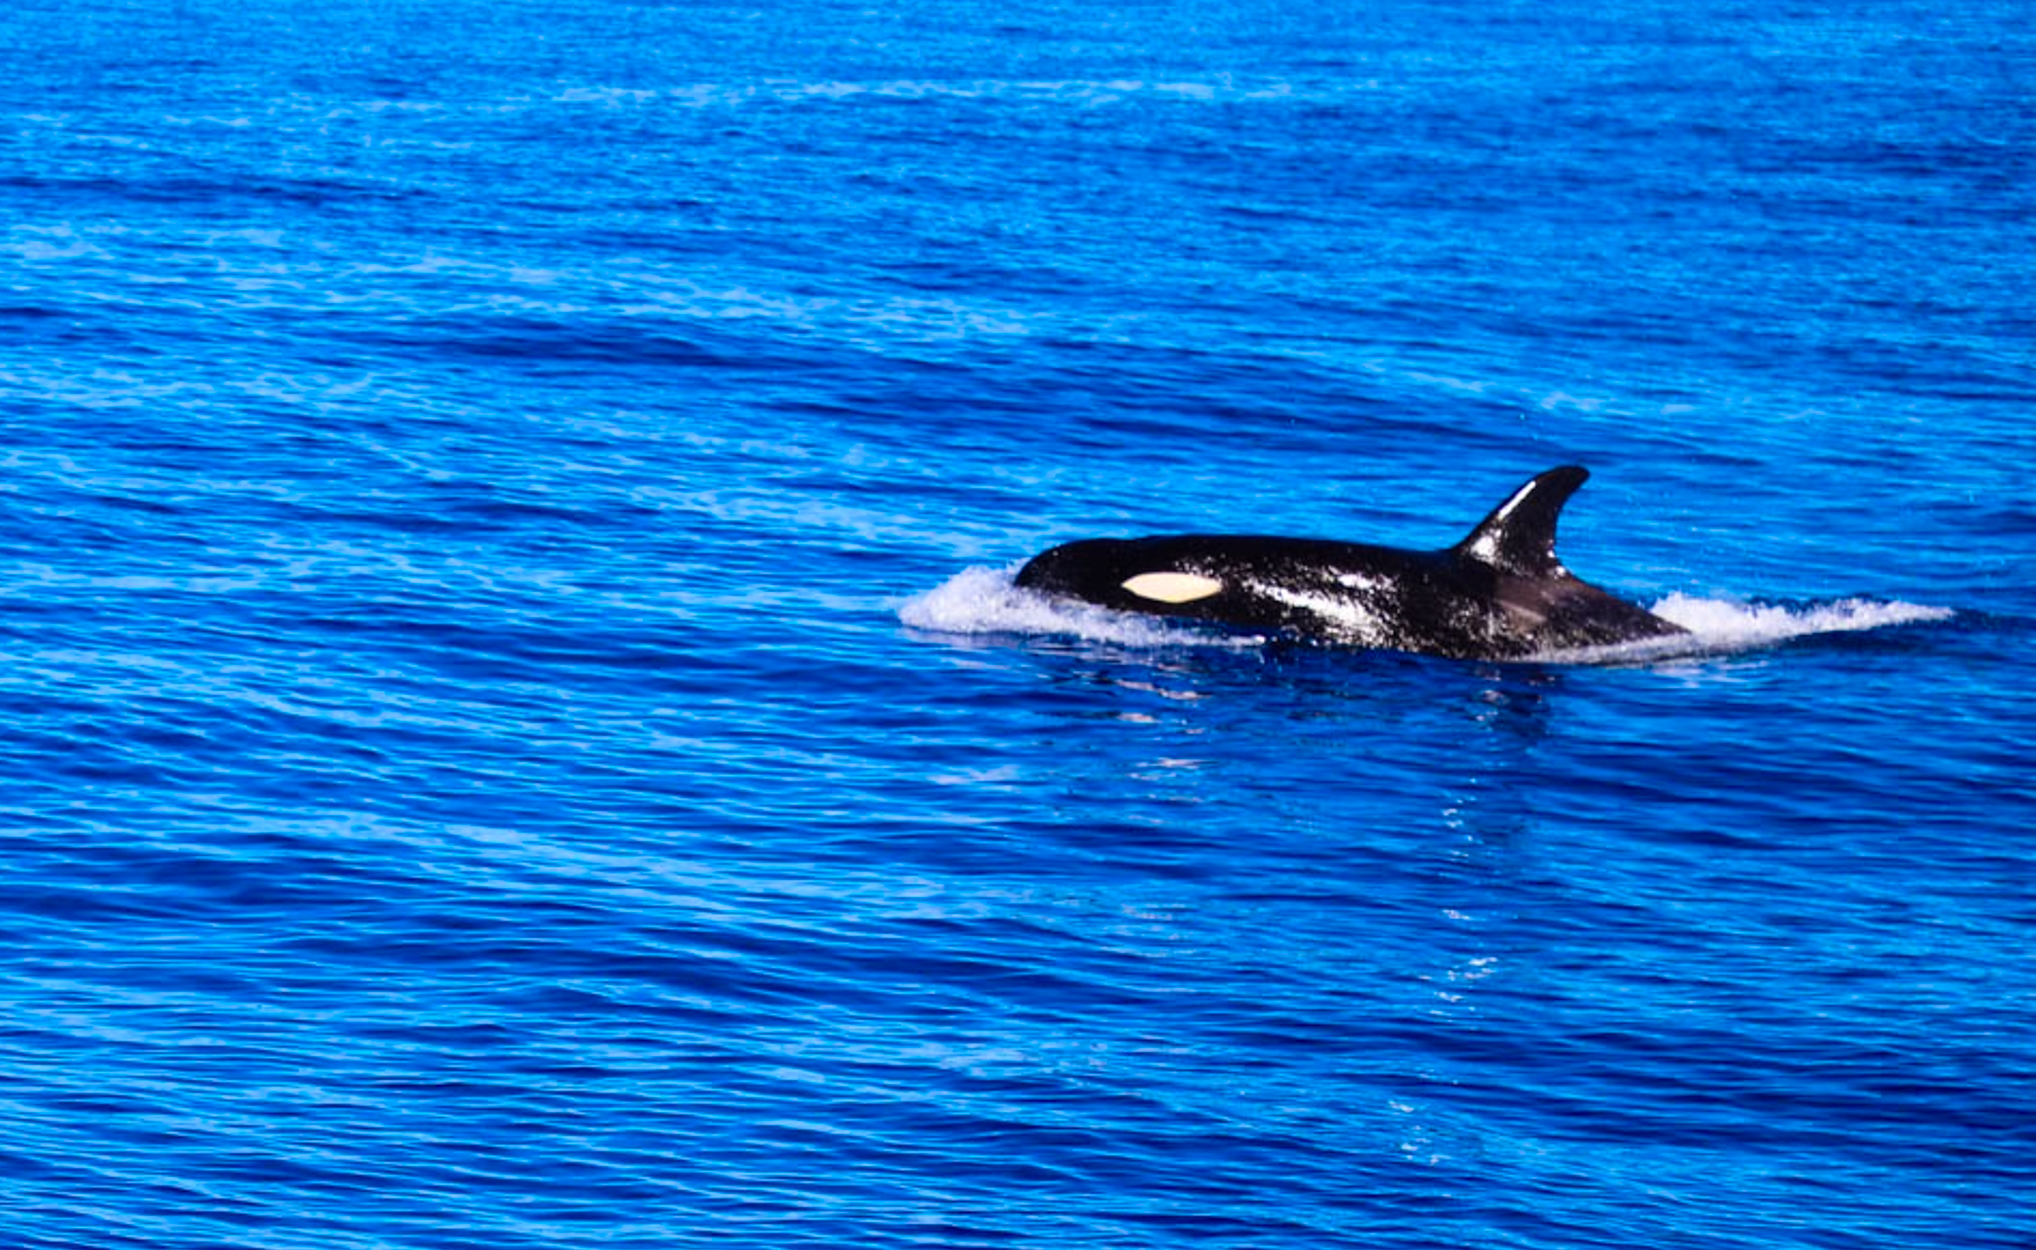 Orca surfacing of the West Coast of Oahu